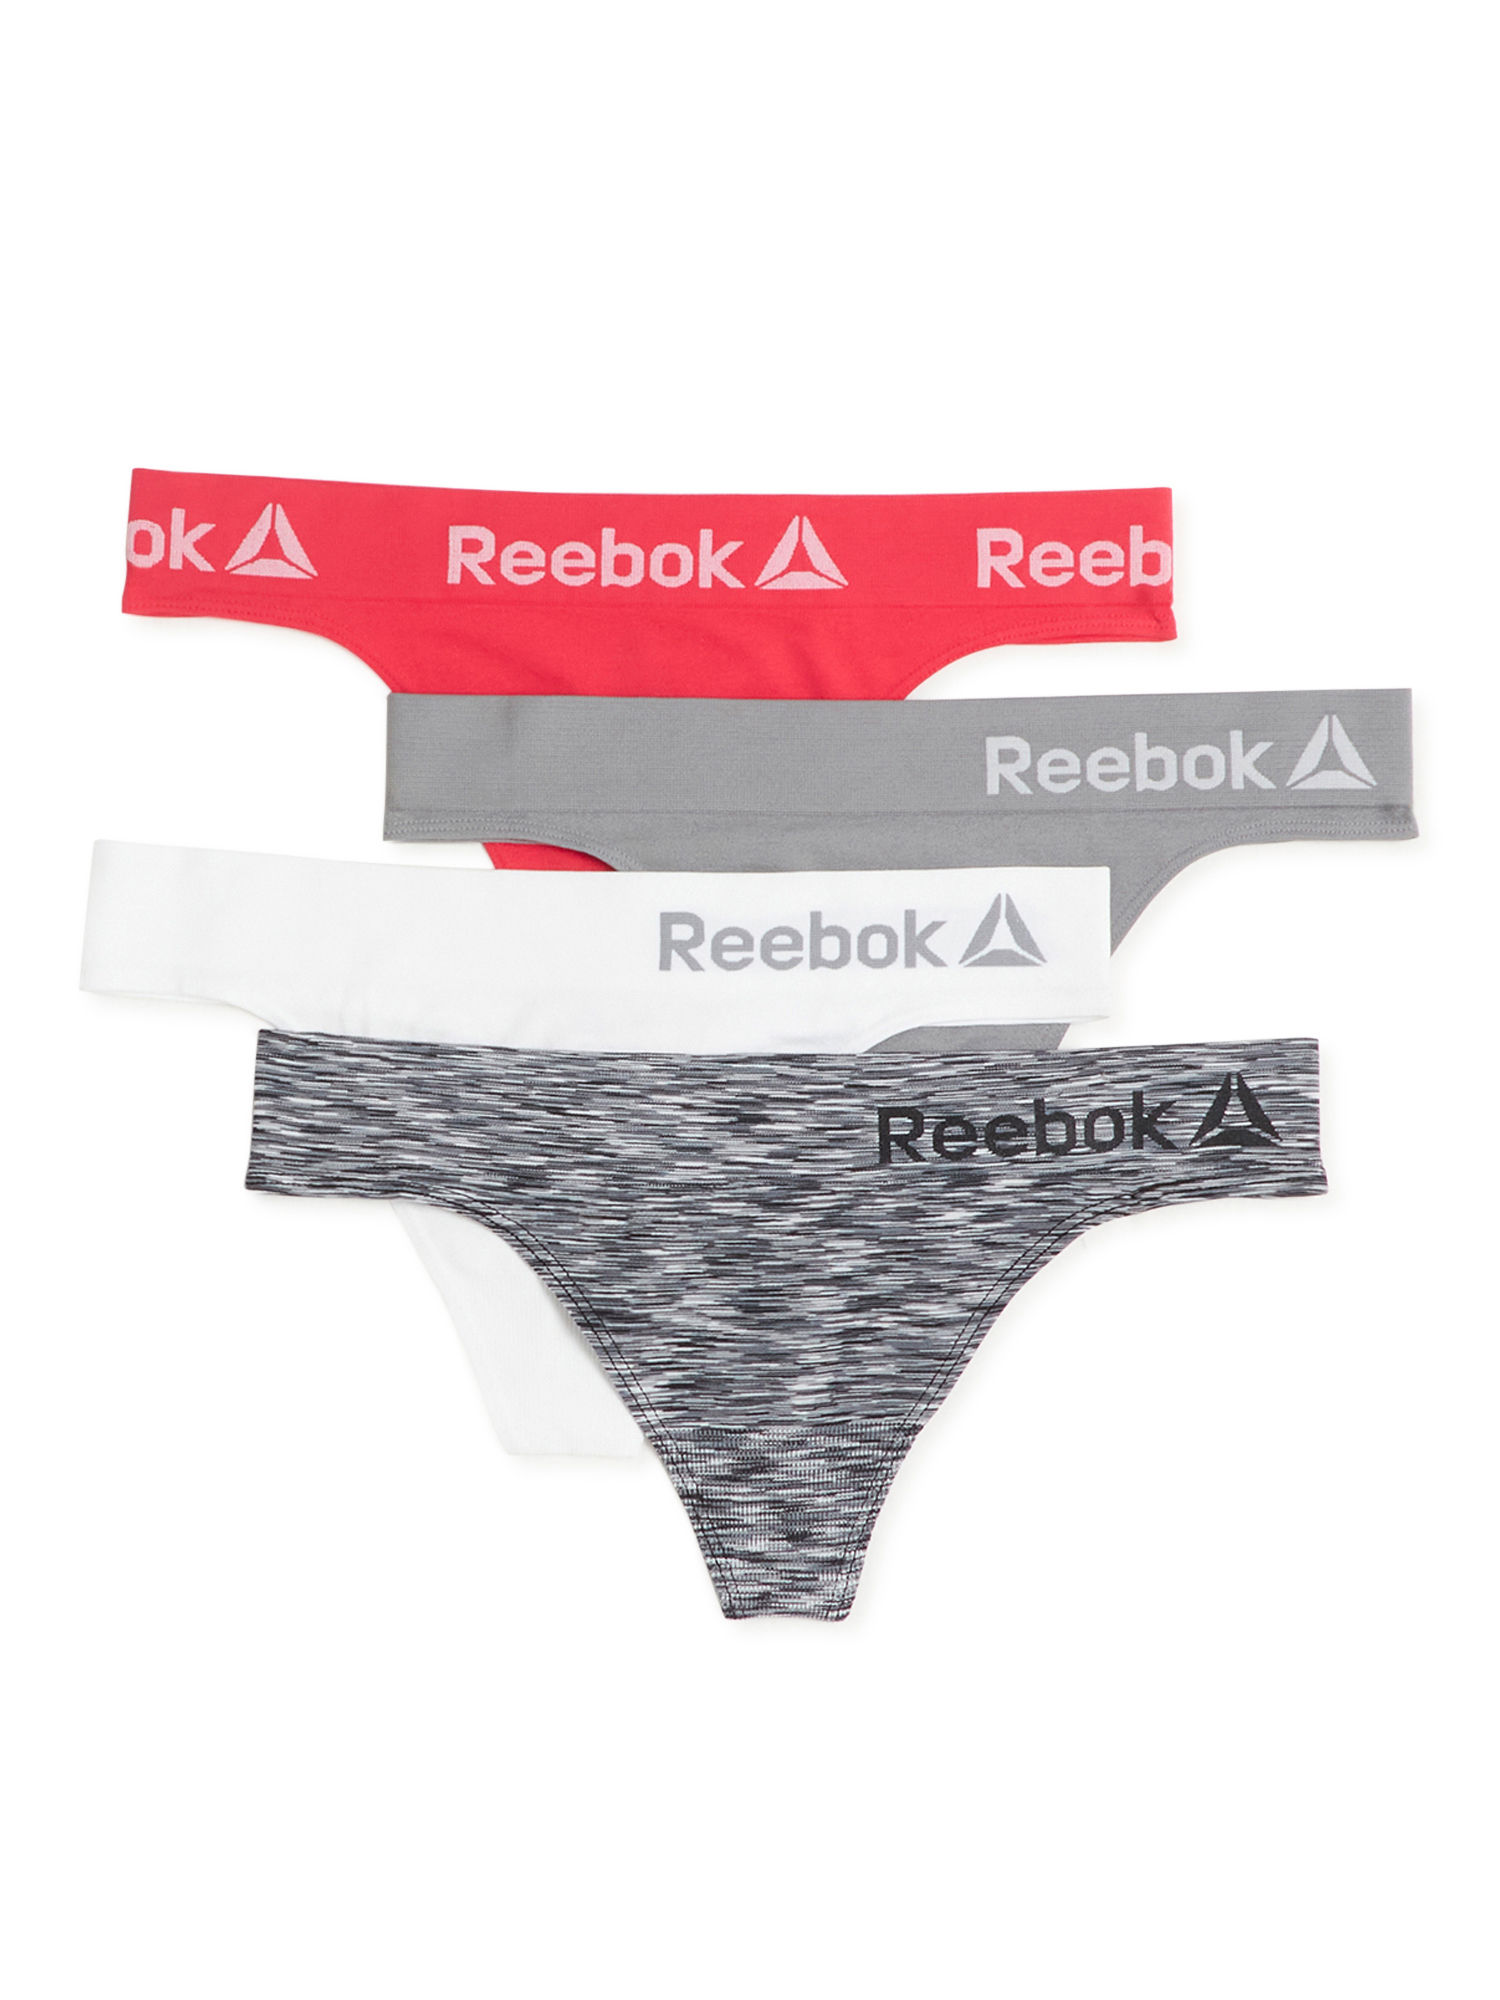 Reebok Women's Seamless Underwear - Hipster, Thong, & Boyshort Panties (4-pack) - $3 - Walmart In-store - YMMV